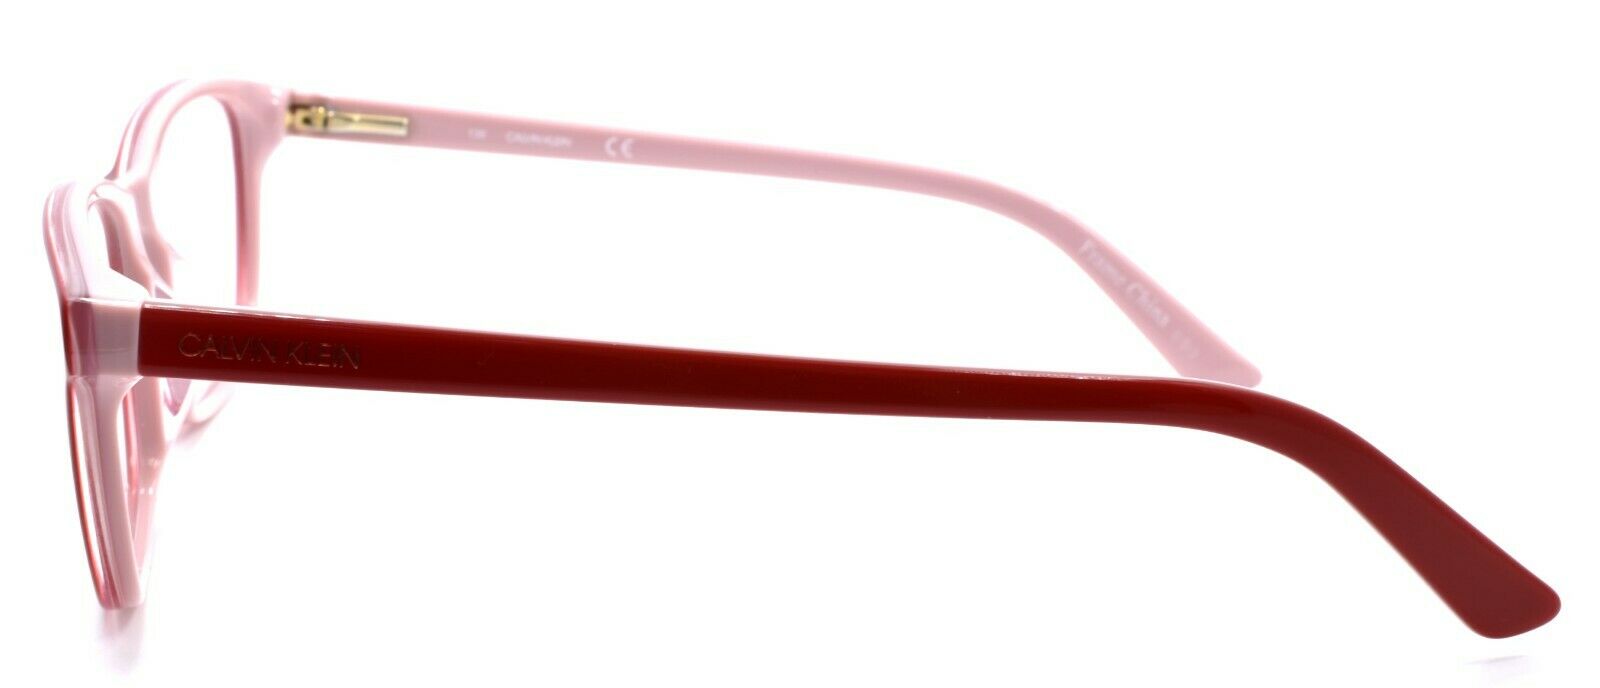 3-Calvin Klein CK18515 610 Women's Eyeglasses Frames 51-15-135 Red / Blush-883901100822-IKSpecs